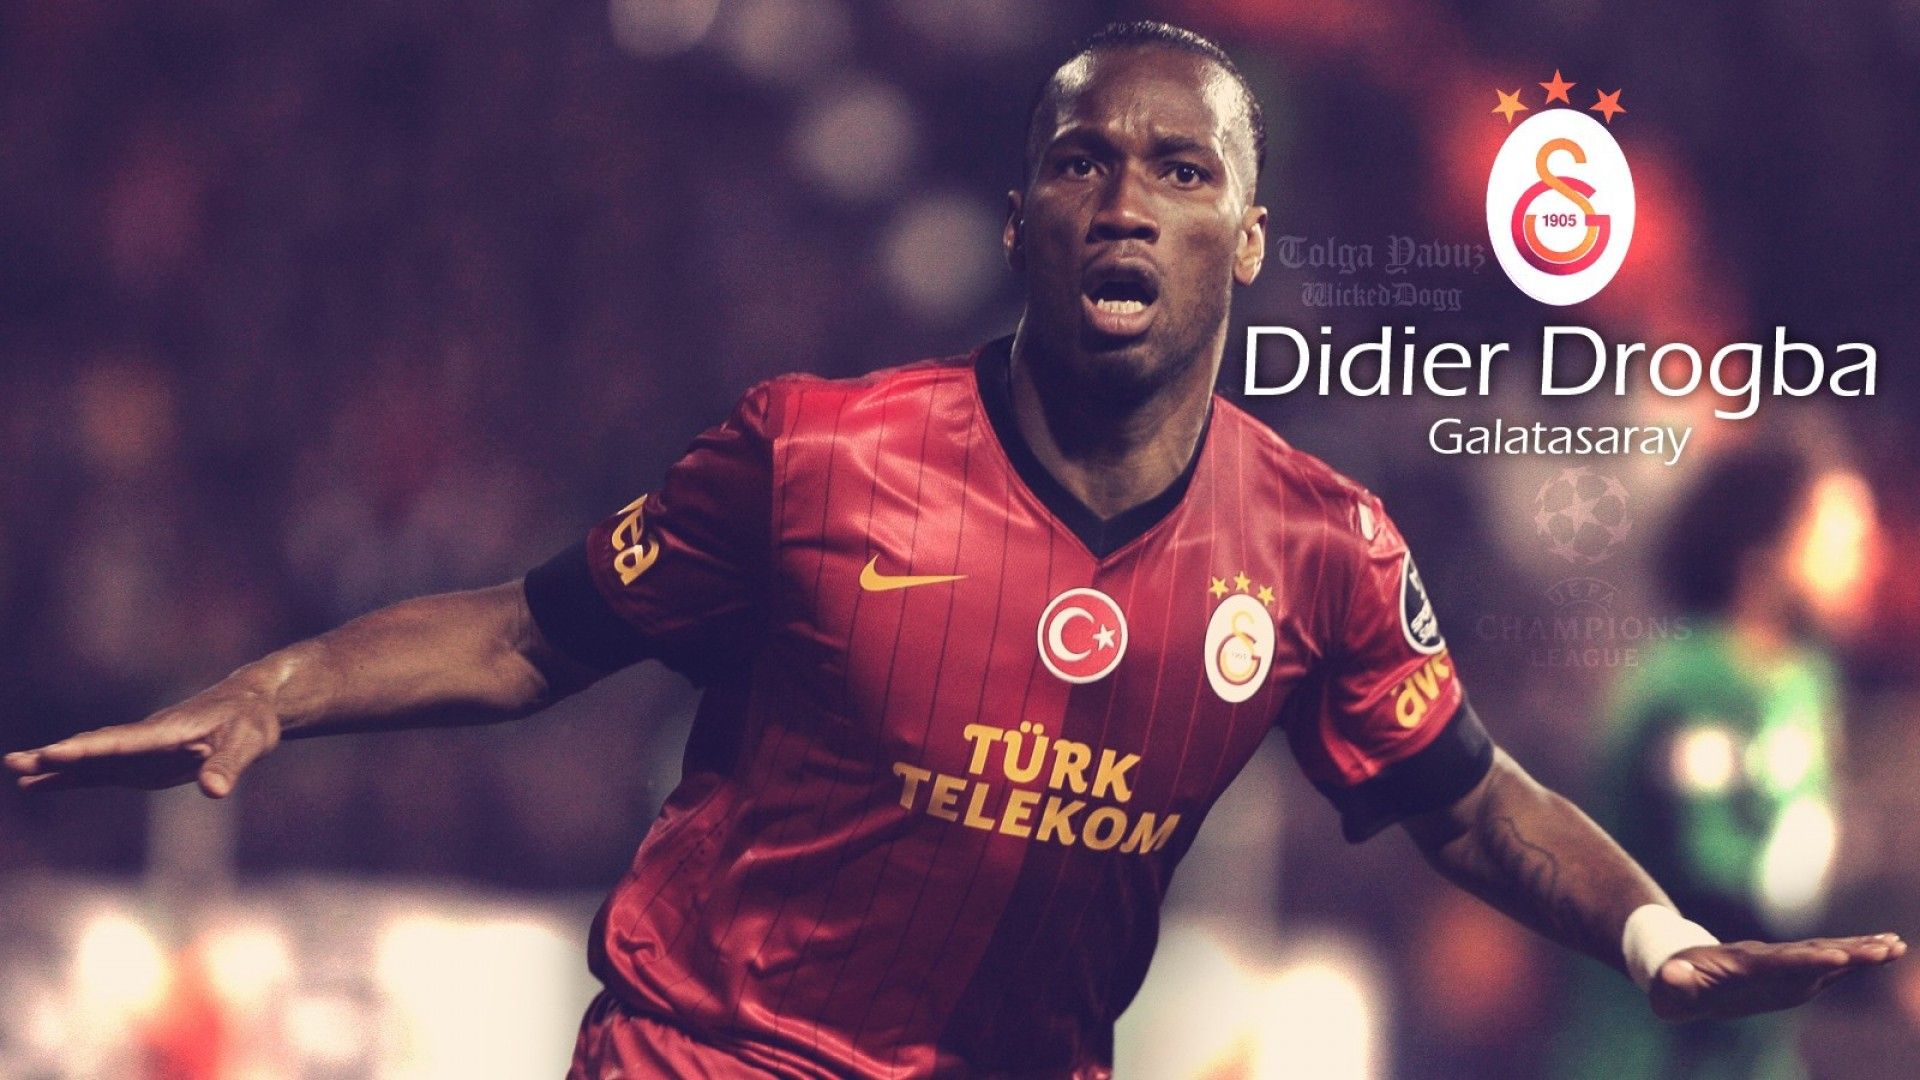 HD wallpaper, Galatasaray, Didier, Drogba